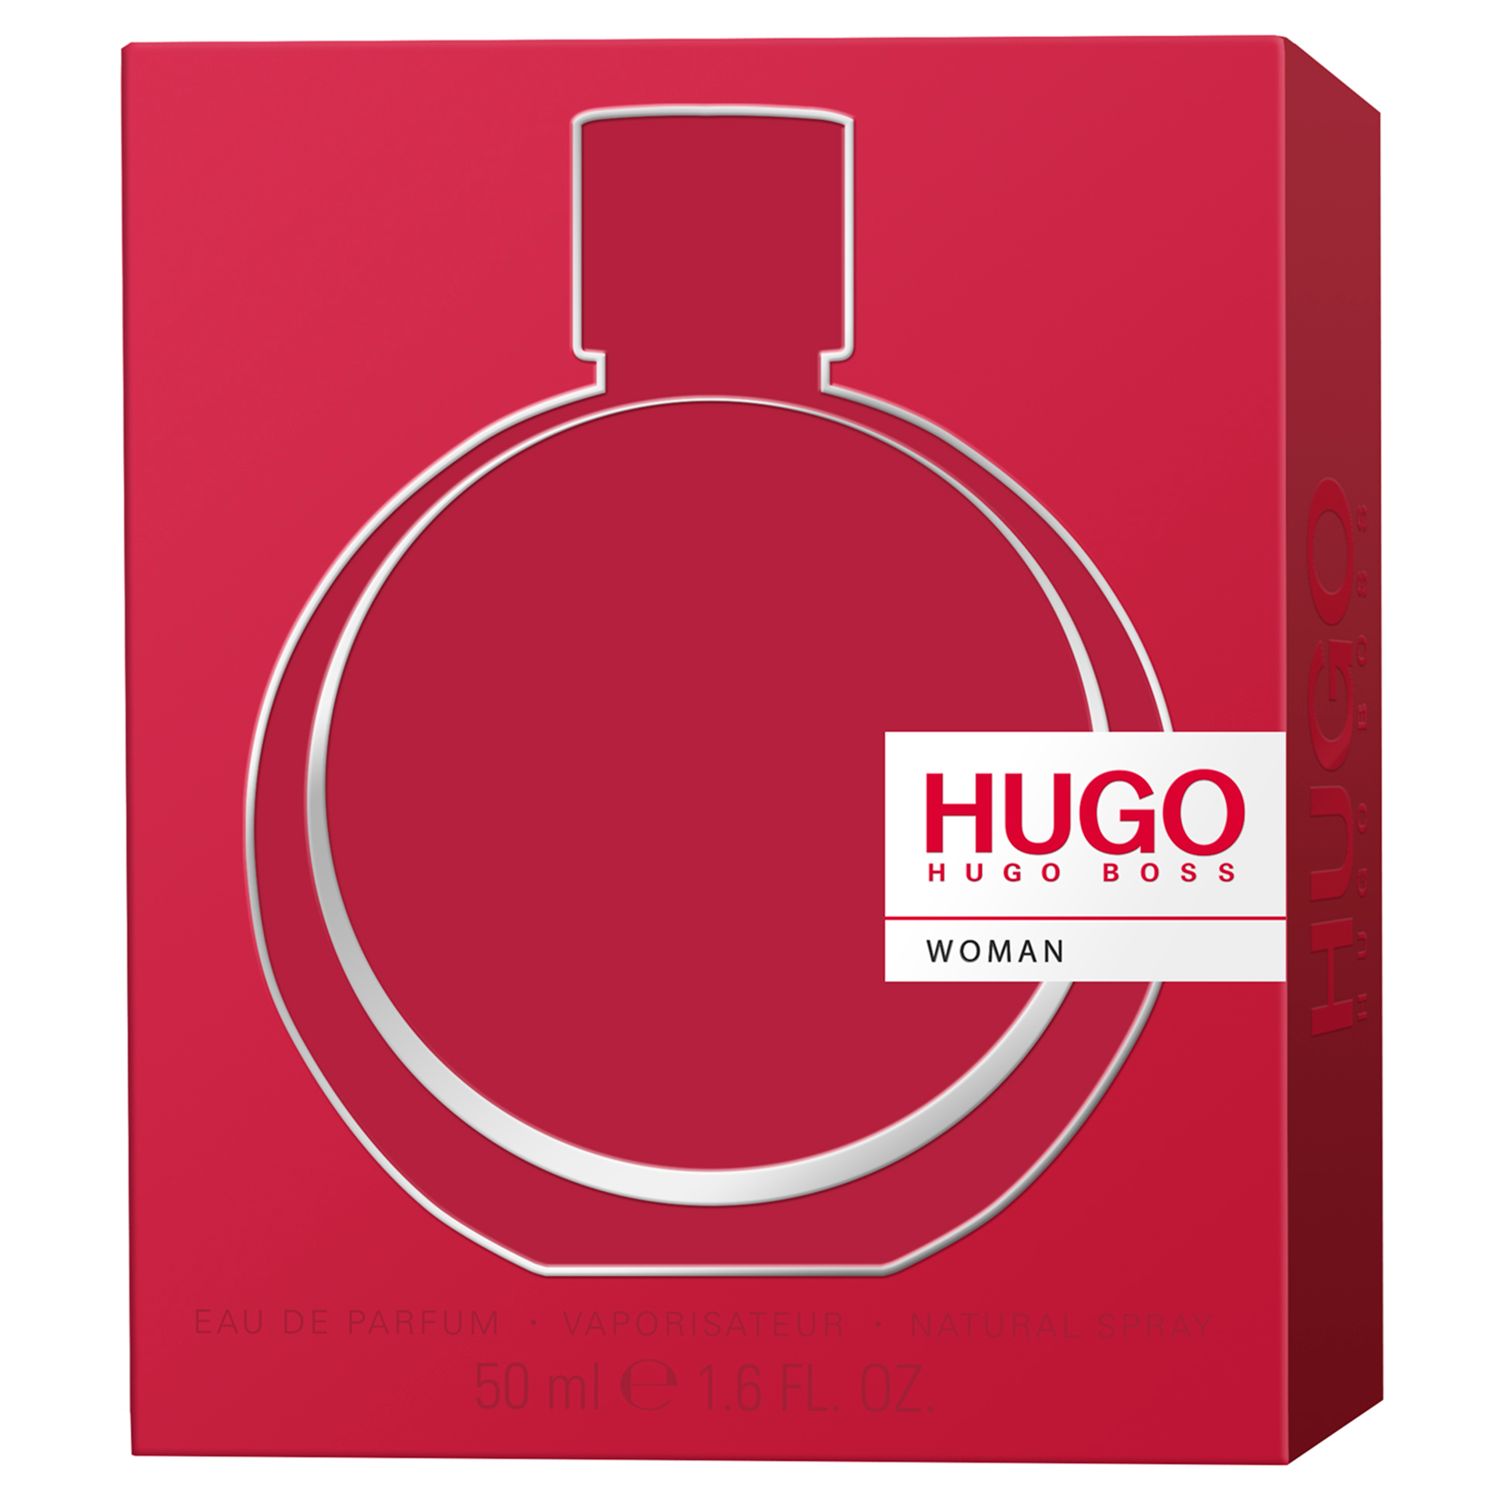 HUGO Woman Eau de Parfum, 50ml 3